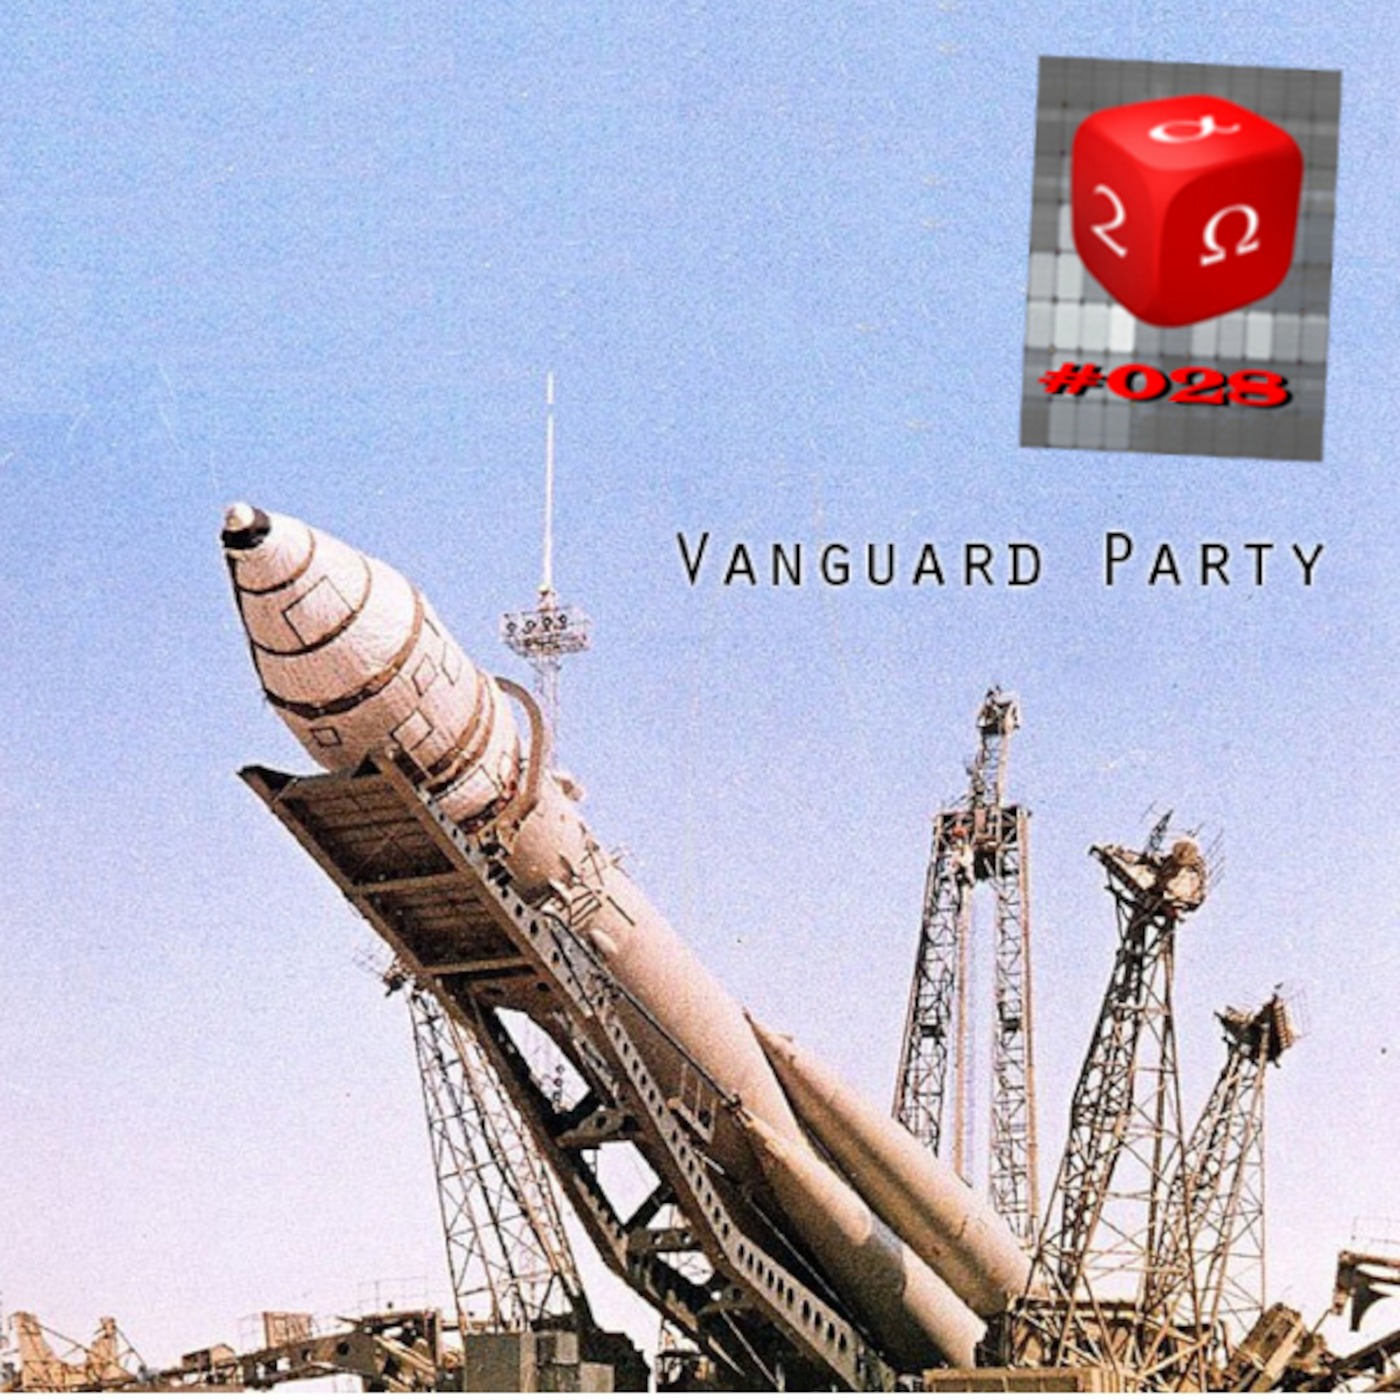 #028 The Vanguard Party